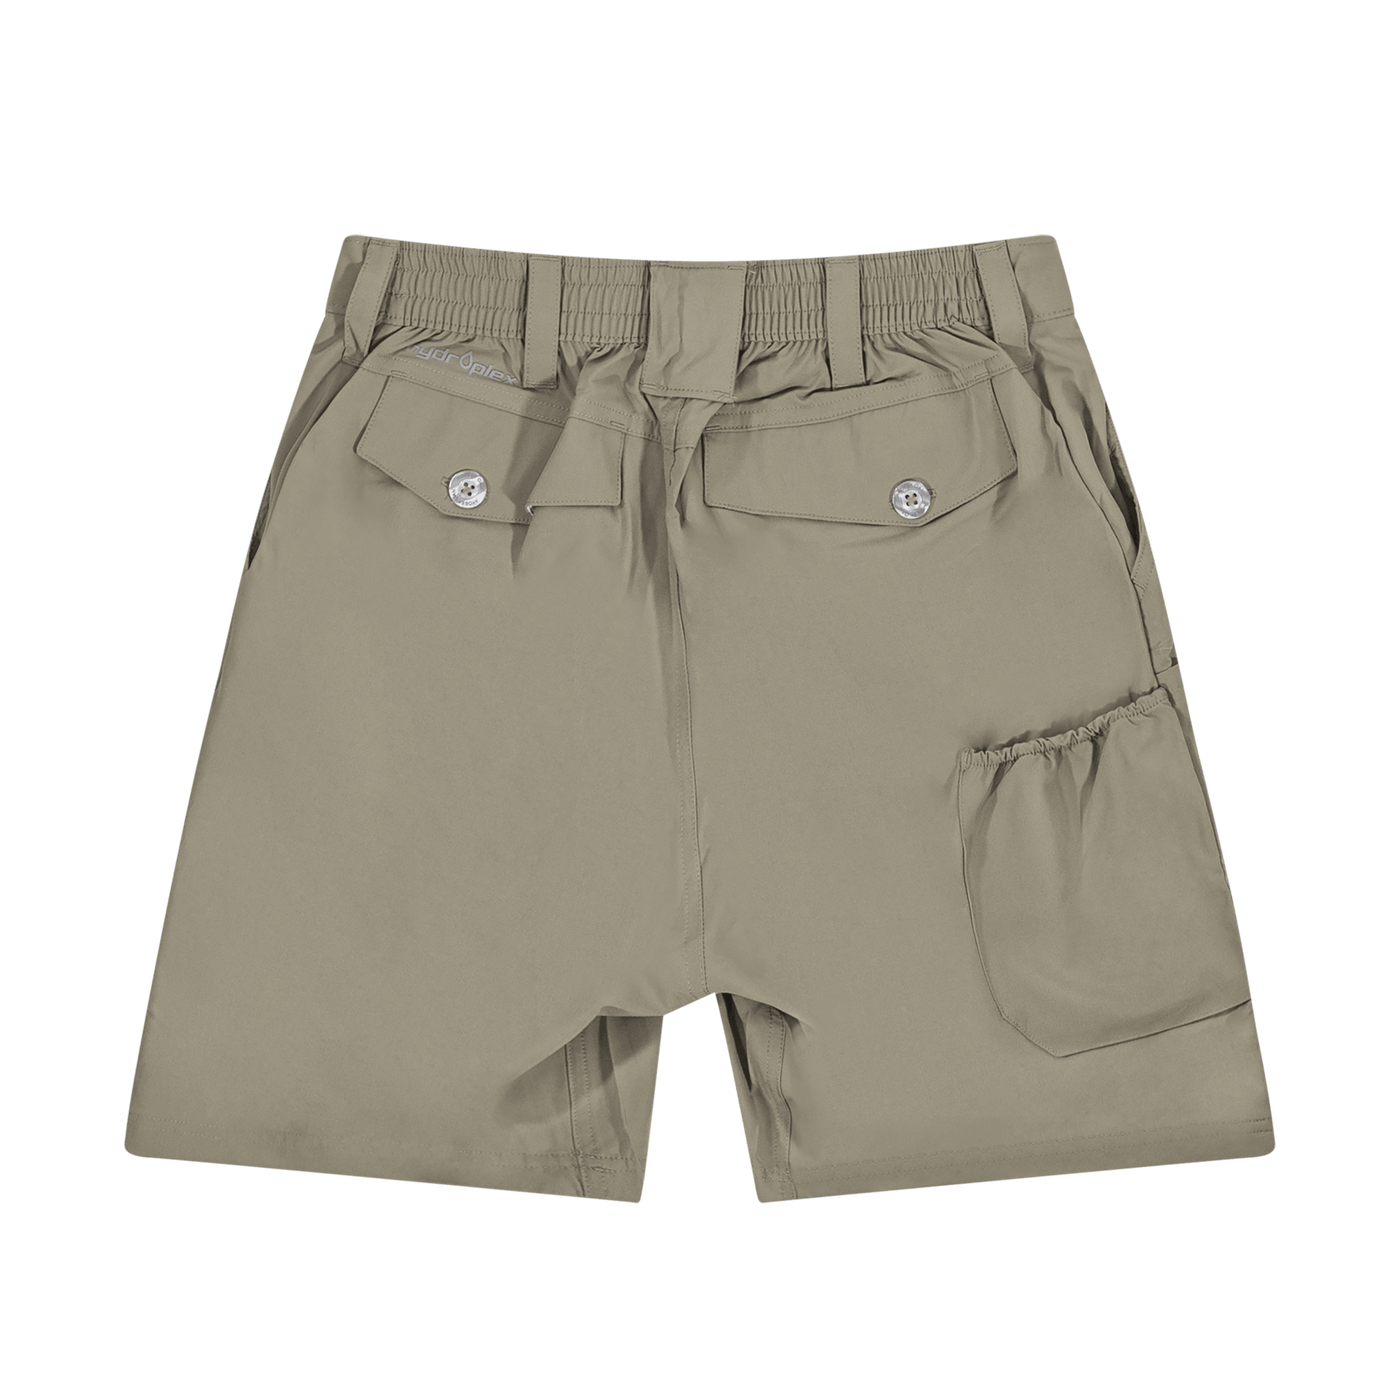 Mossy Oak Men's Fishing Short's, Swim Trunks, Navy, Small